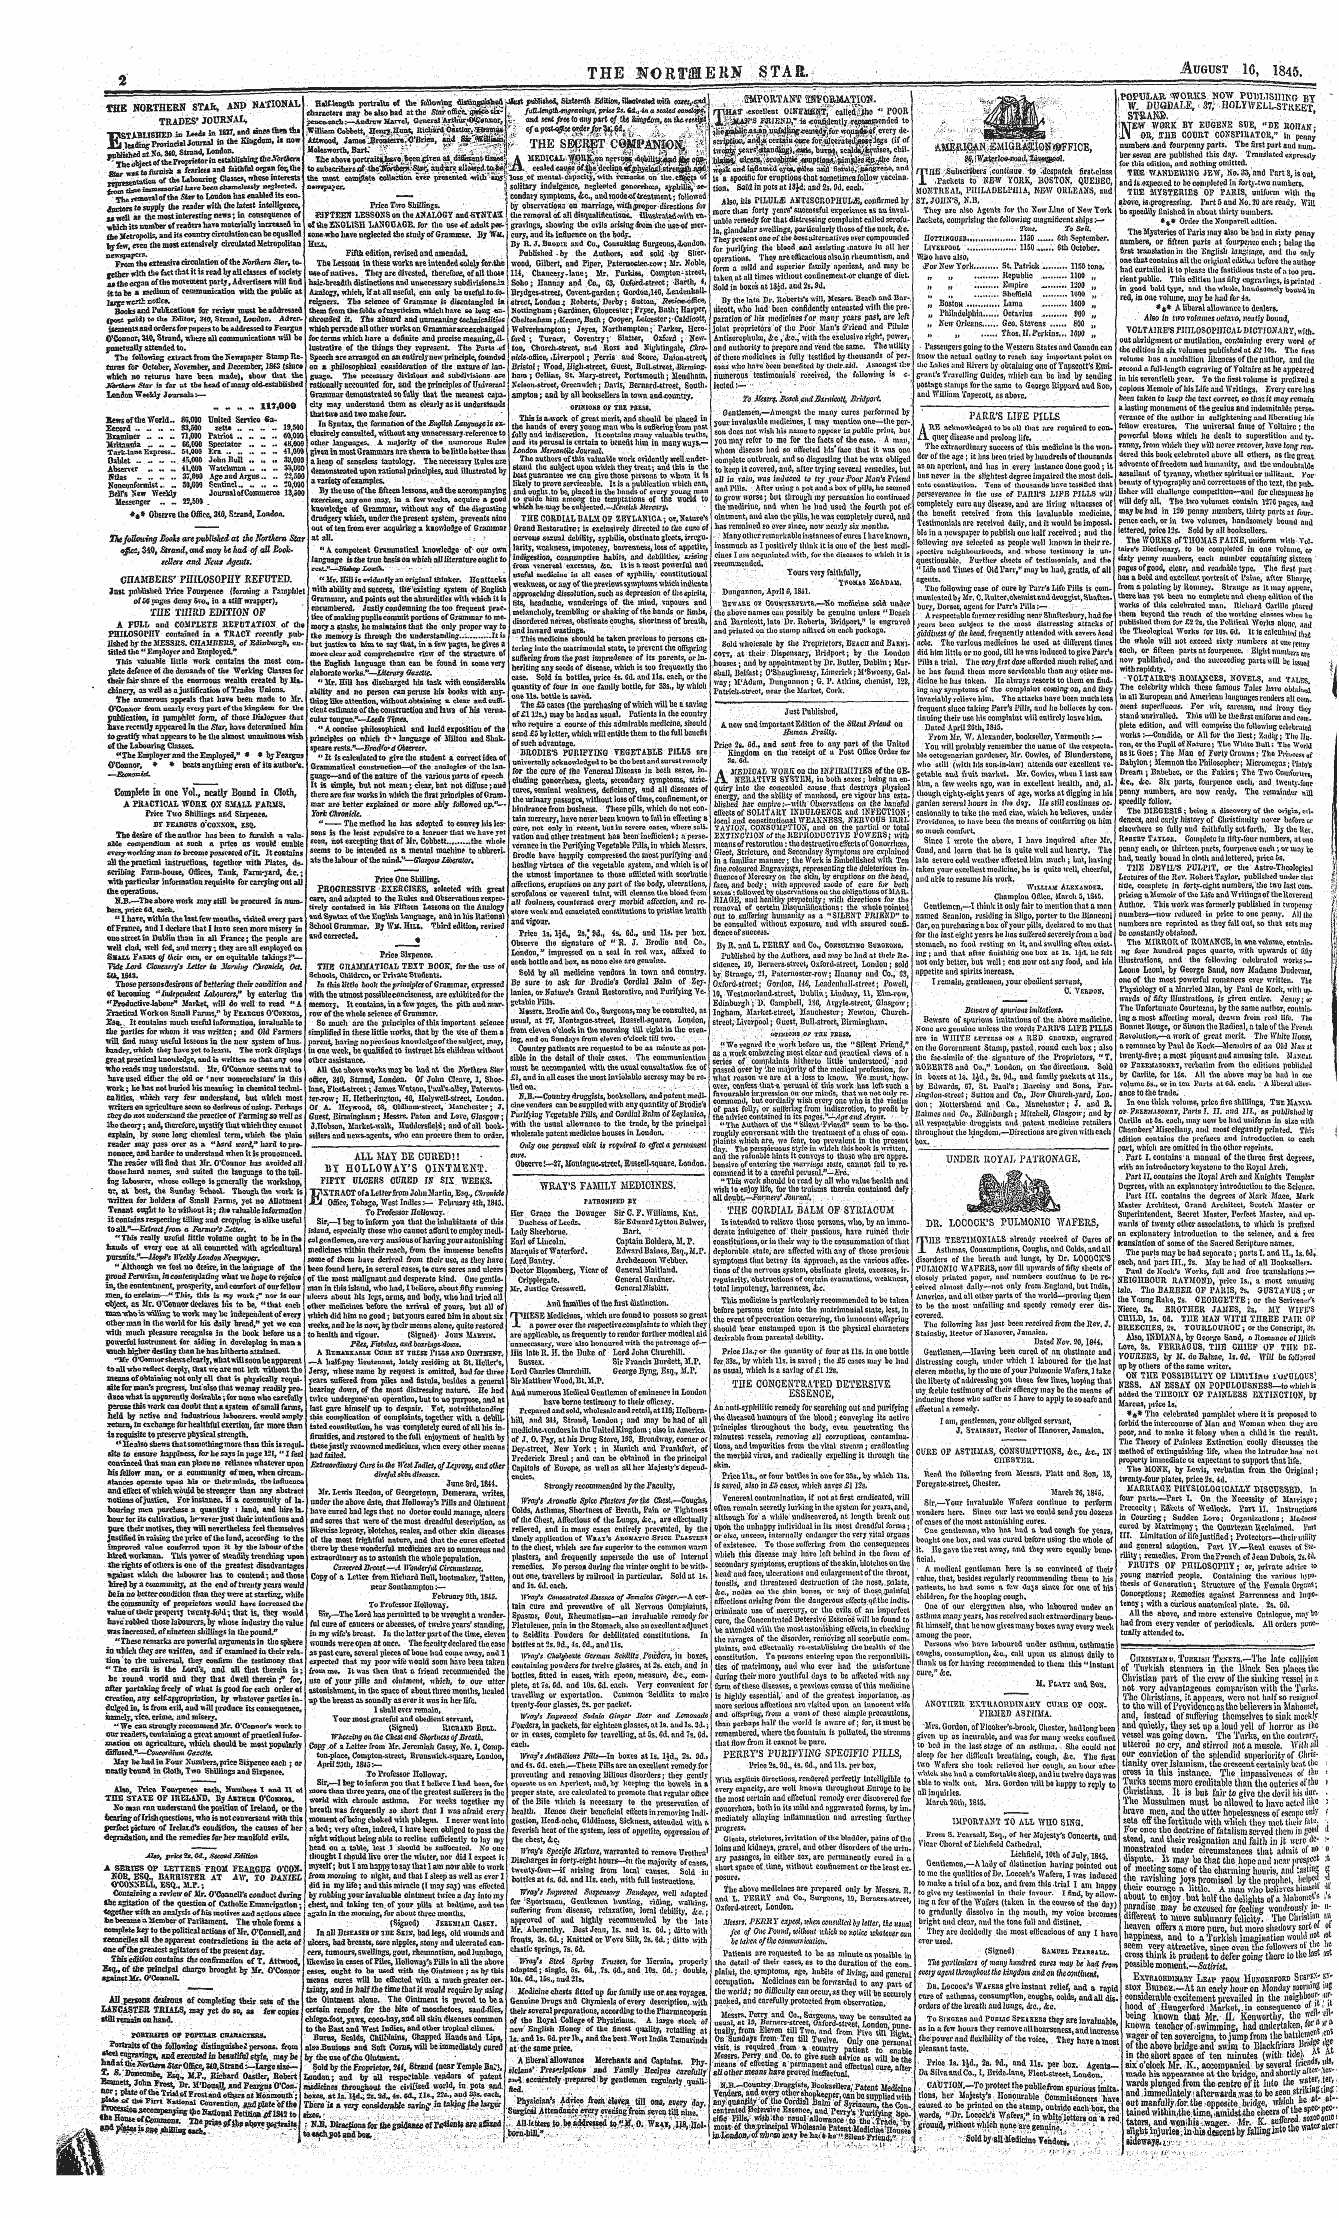 Northern Star (1837-1852): jS F Y, 3rd edition - Ad00211